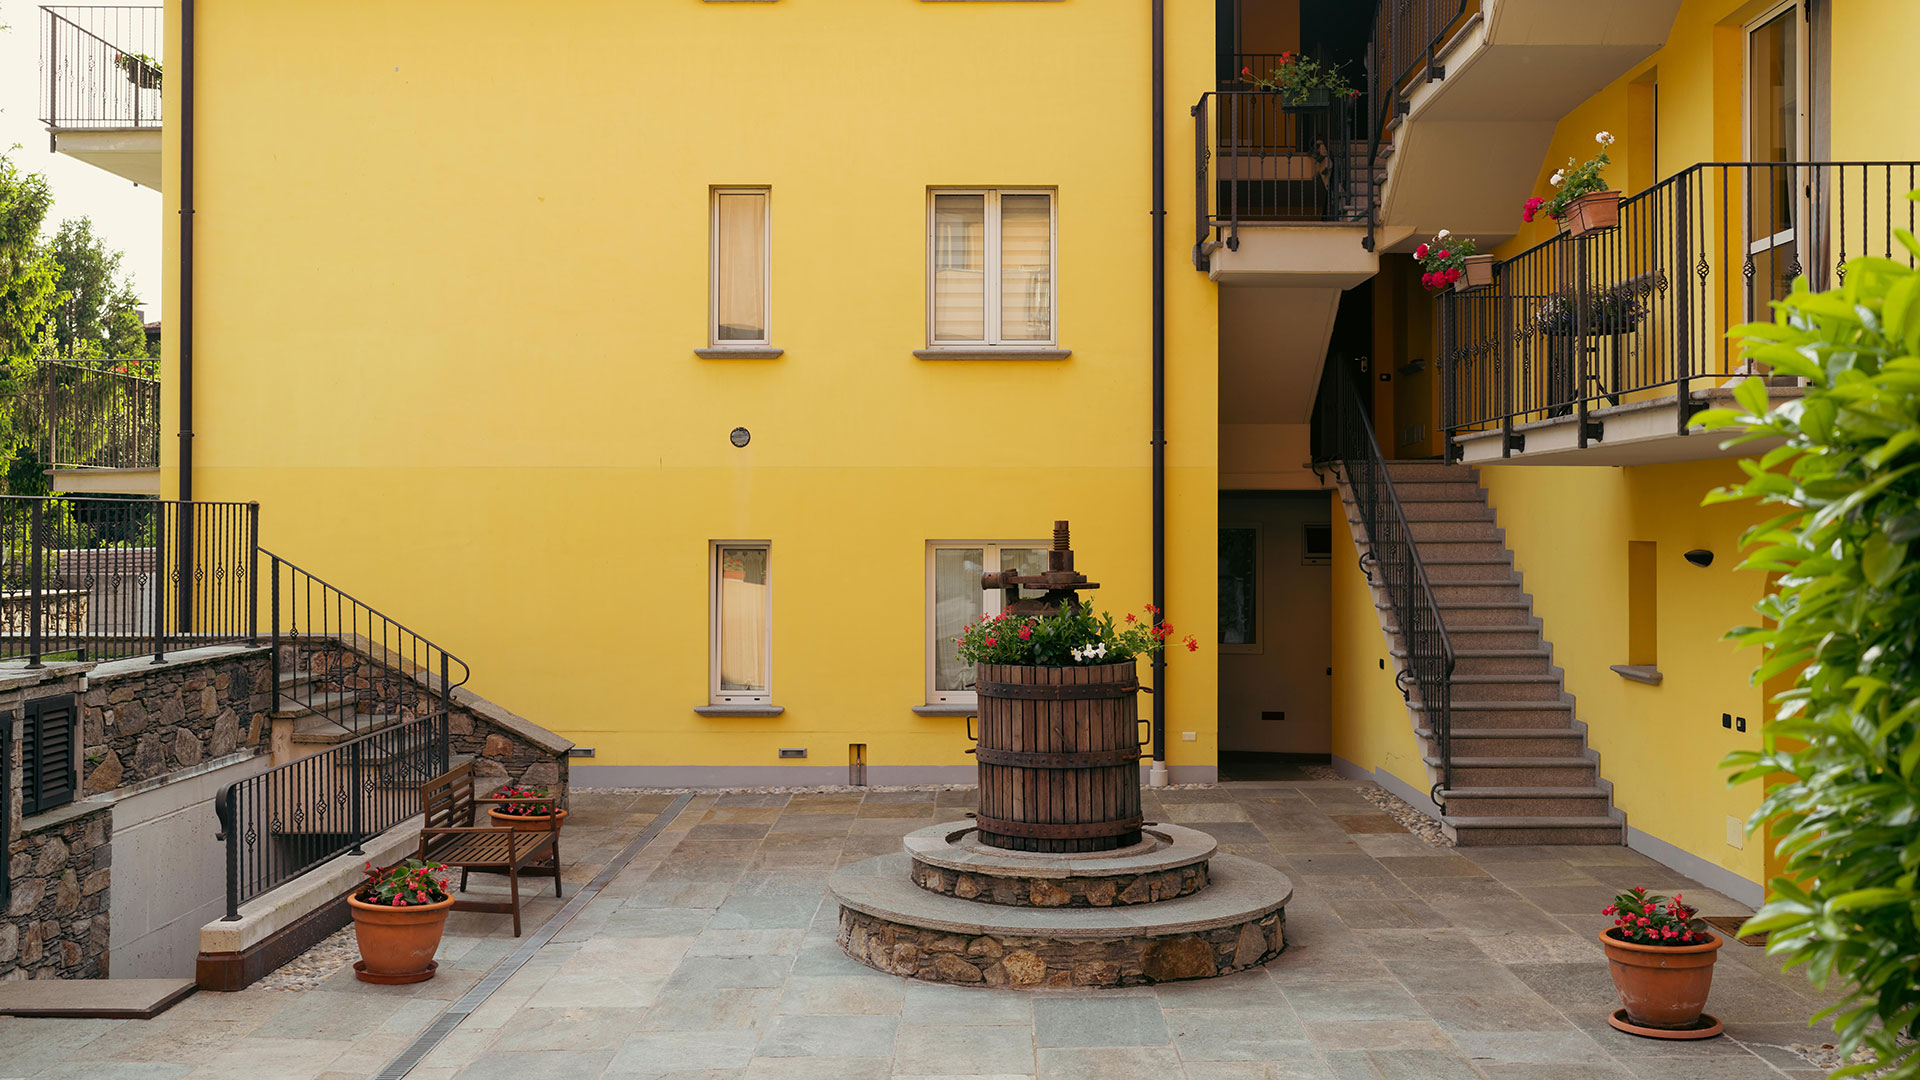 Faggio Rosso Apartment, Antico Torchio Residence